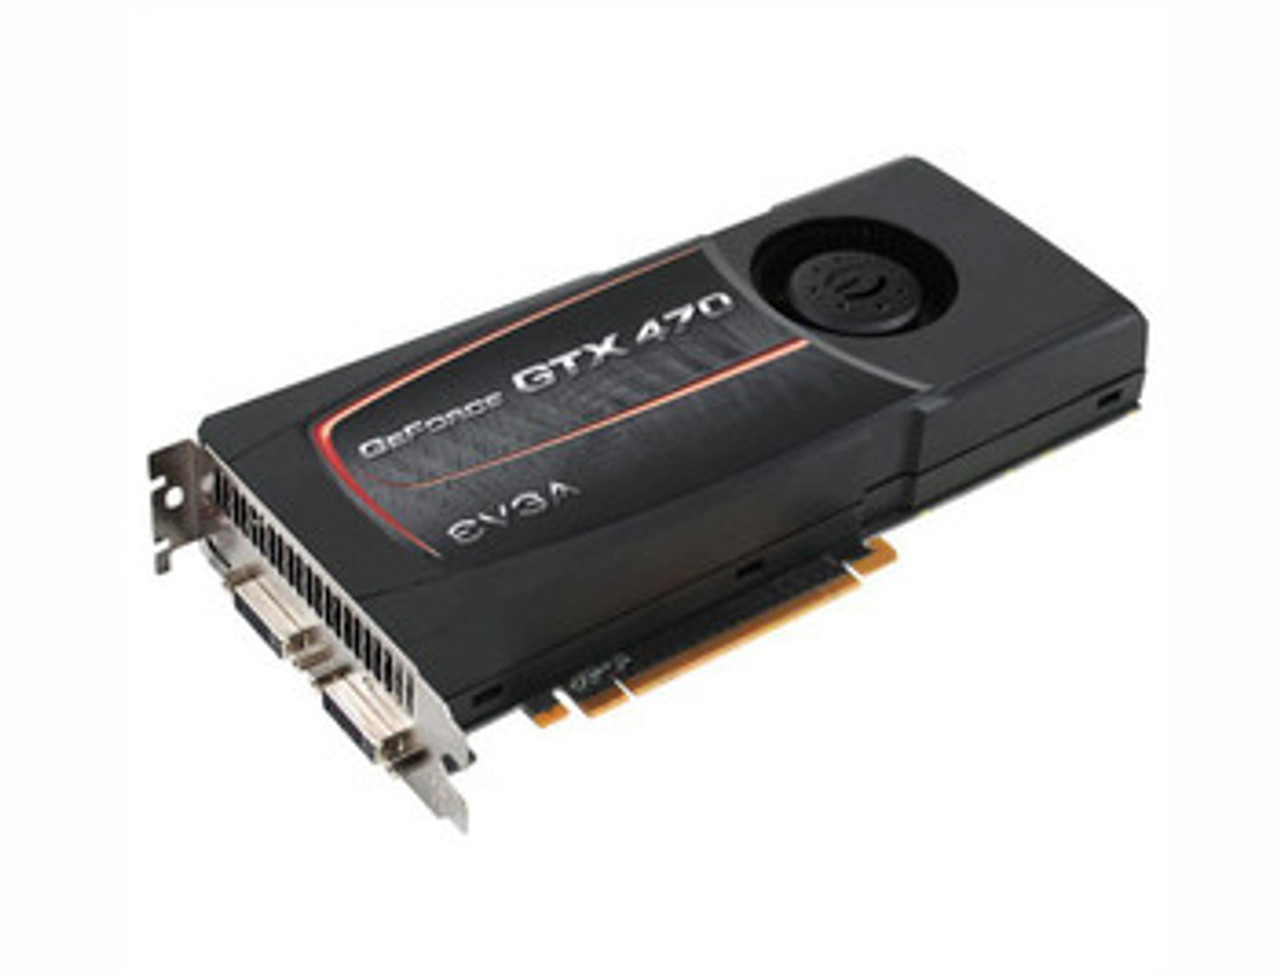 012-P3-1472-R1 | EVGA | GeForce GTX 470 SuperClocked 1280MB 320-Bit GDDR5 PCI Express 2.0 x16 Dual DVI/ HDMI Video Graphics Card